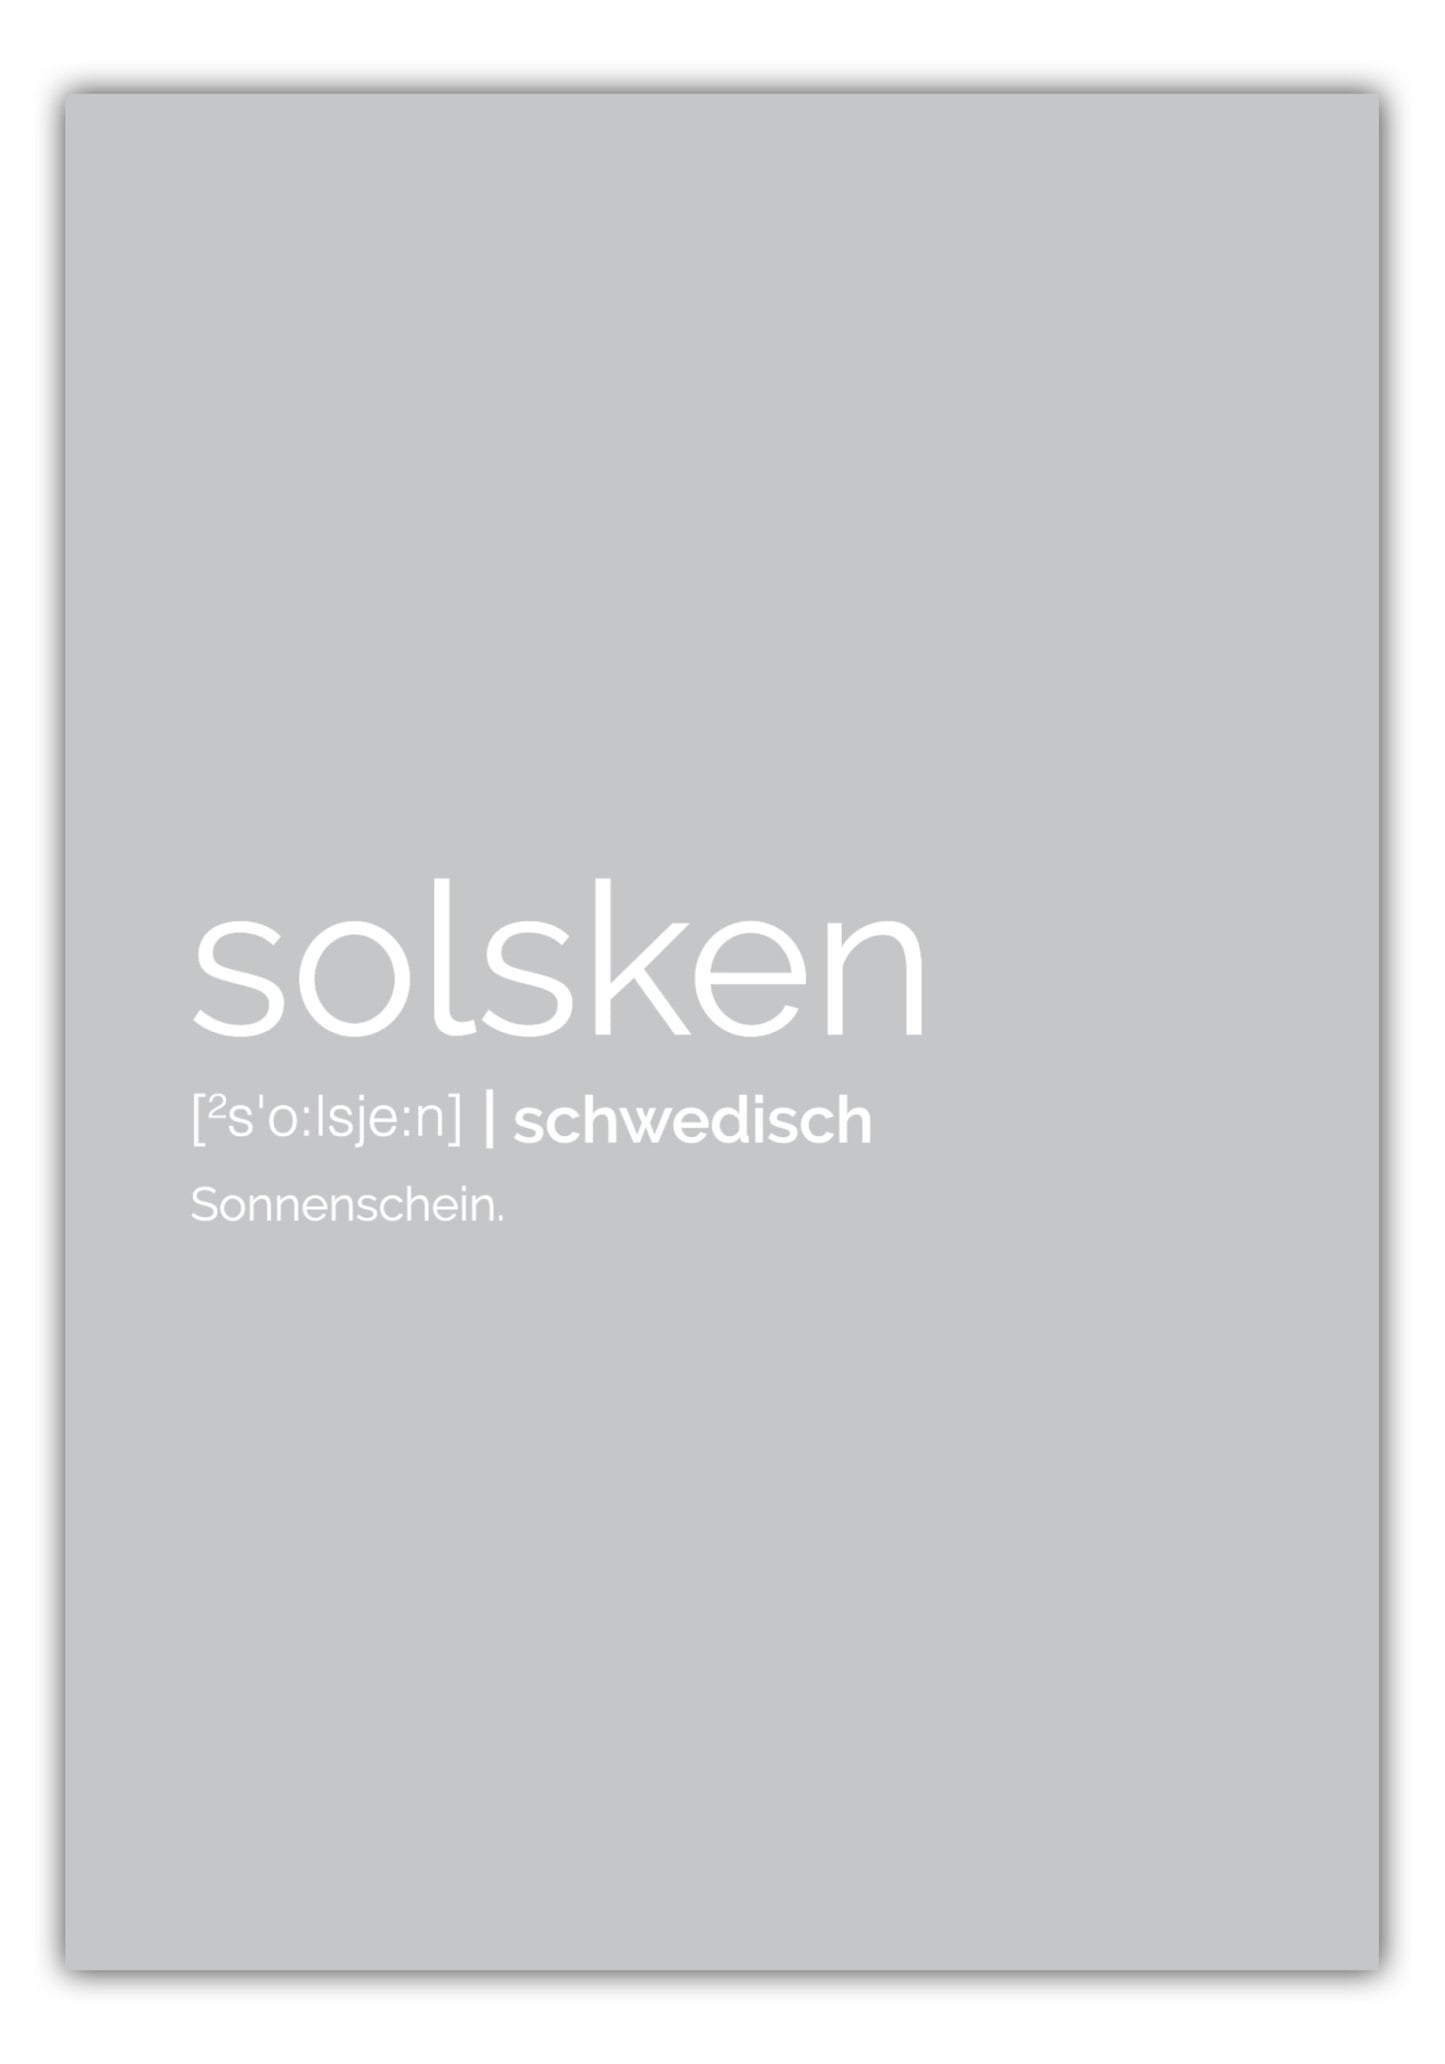 Poster Solsken - Definition